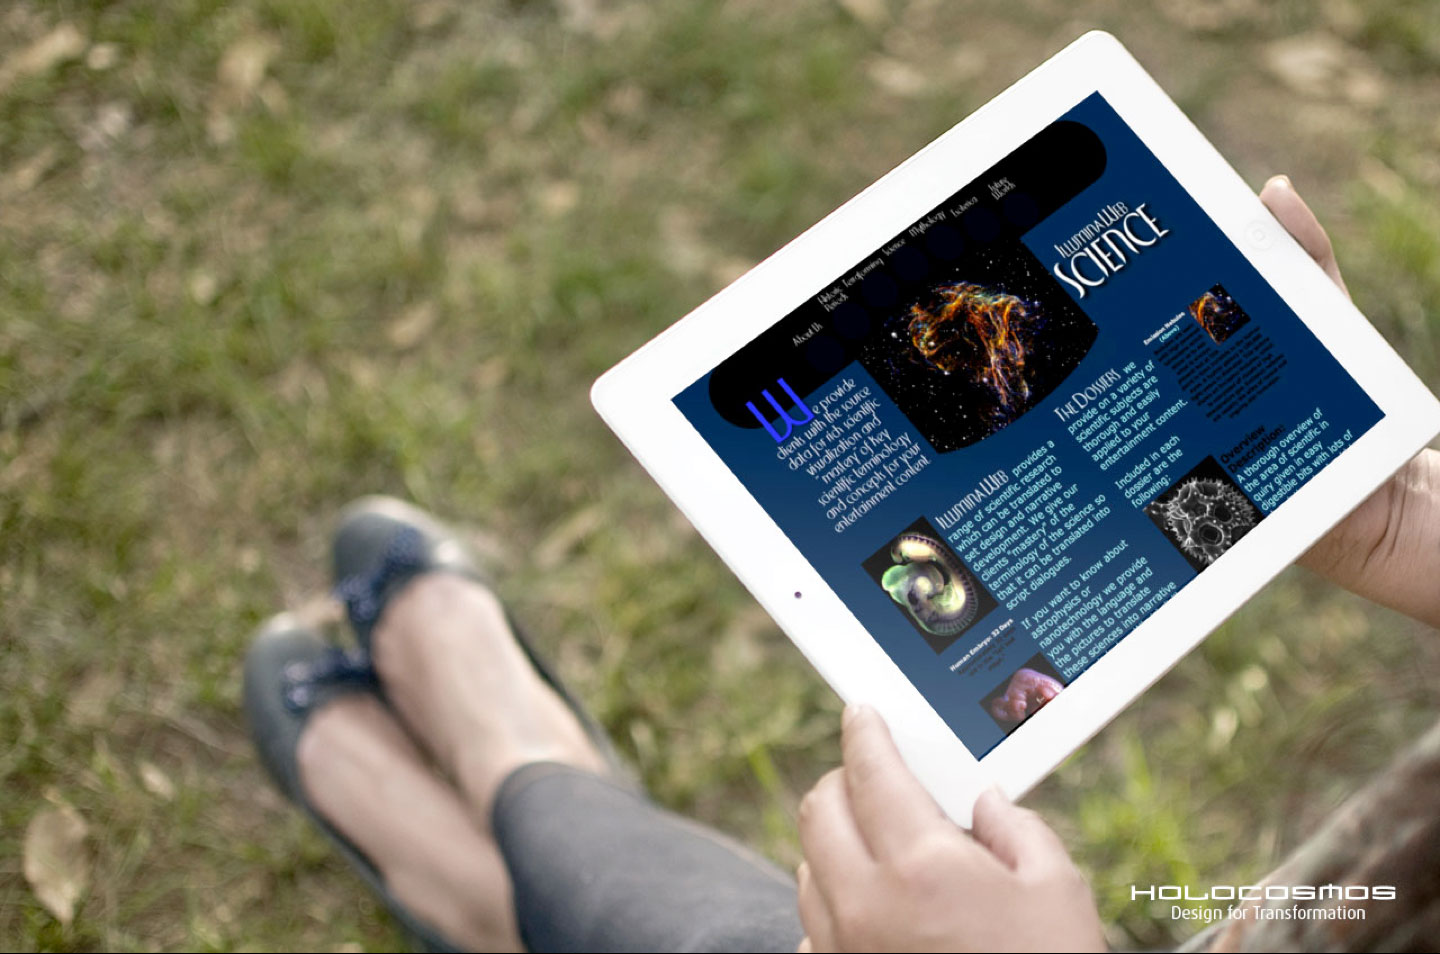 IlluminaWeb-Science-Placeit-iPadMini-design-by-HoloCosmos